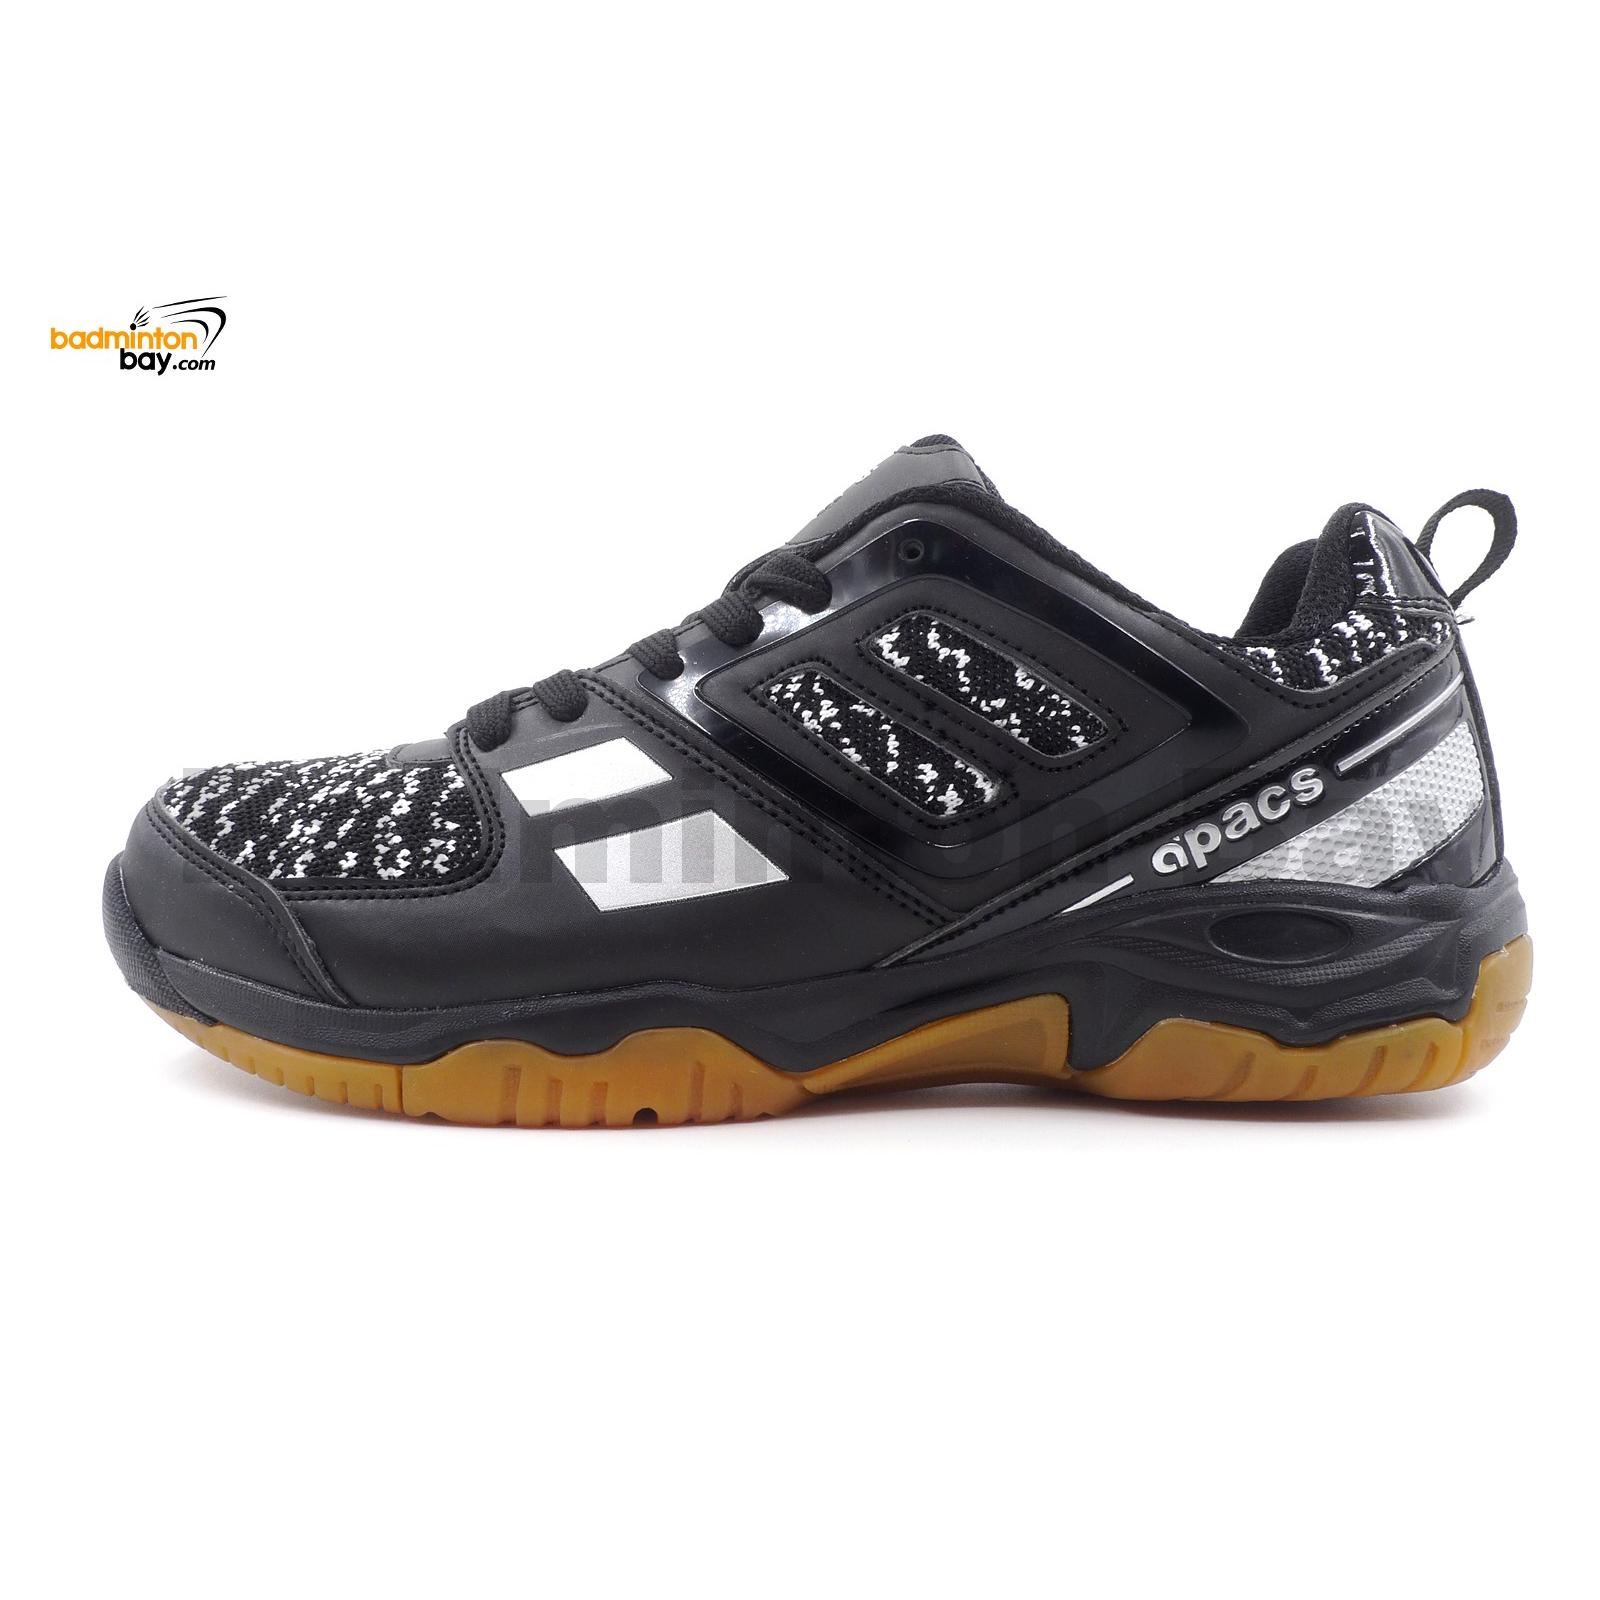 Apacs Cushion Power 073 Black Badminton Shoes With Improved Cushioning